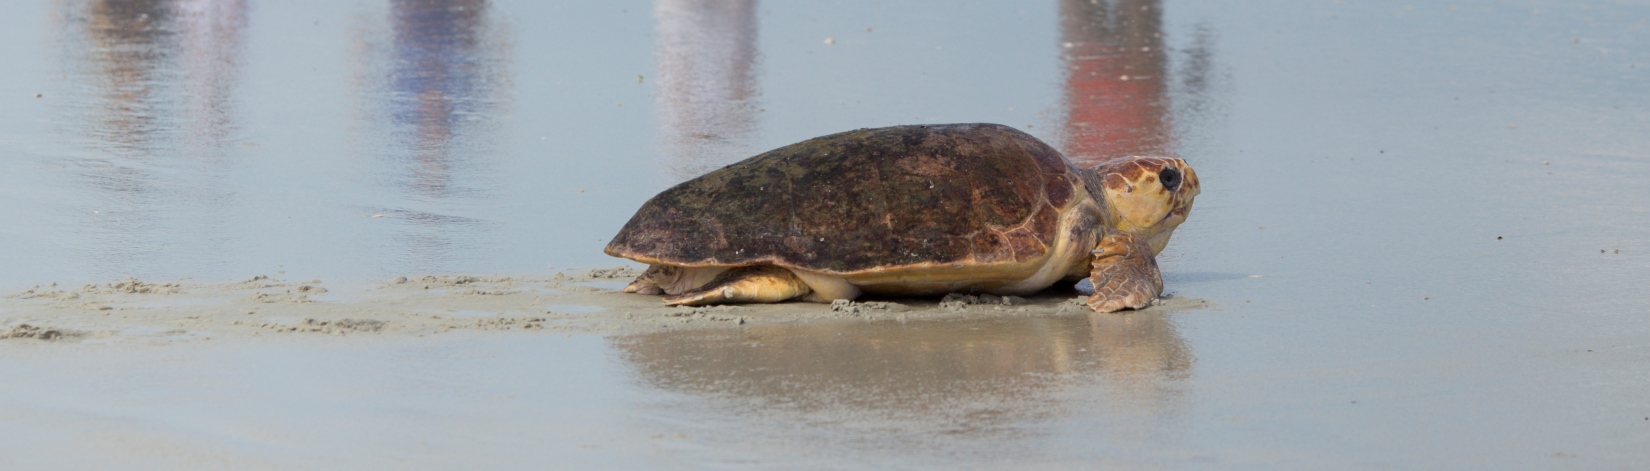 a large loggerhead sea turtle crawling down the beach towards the ocean